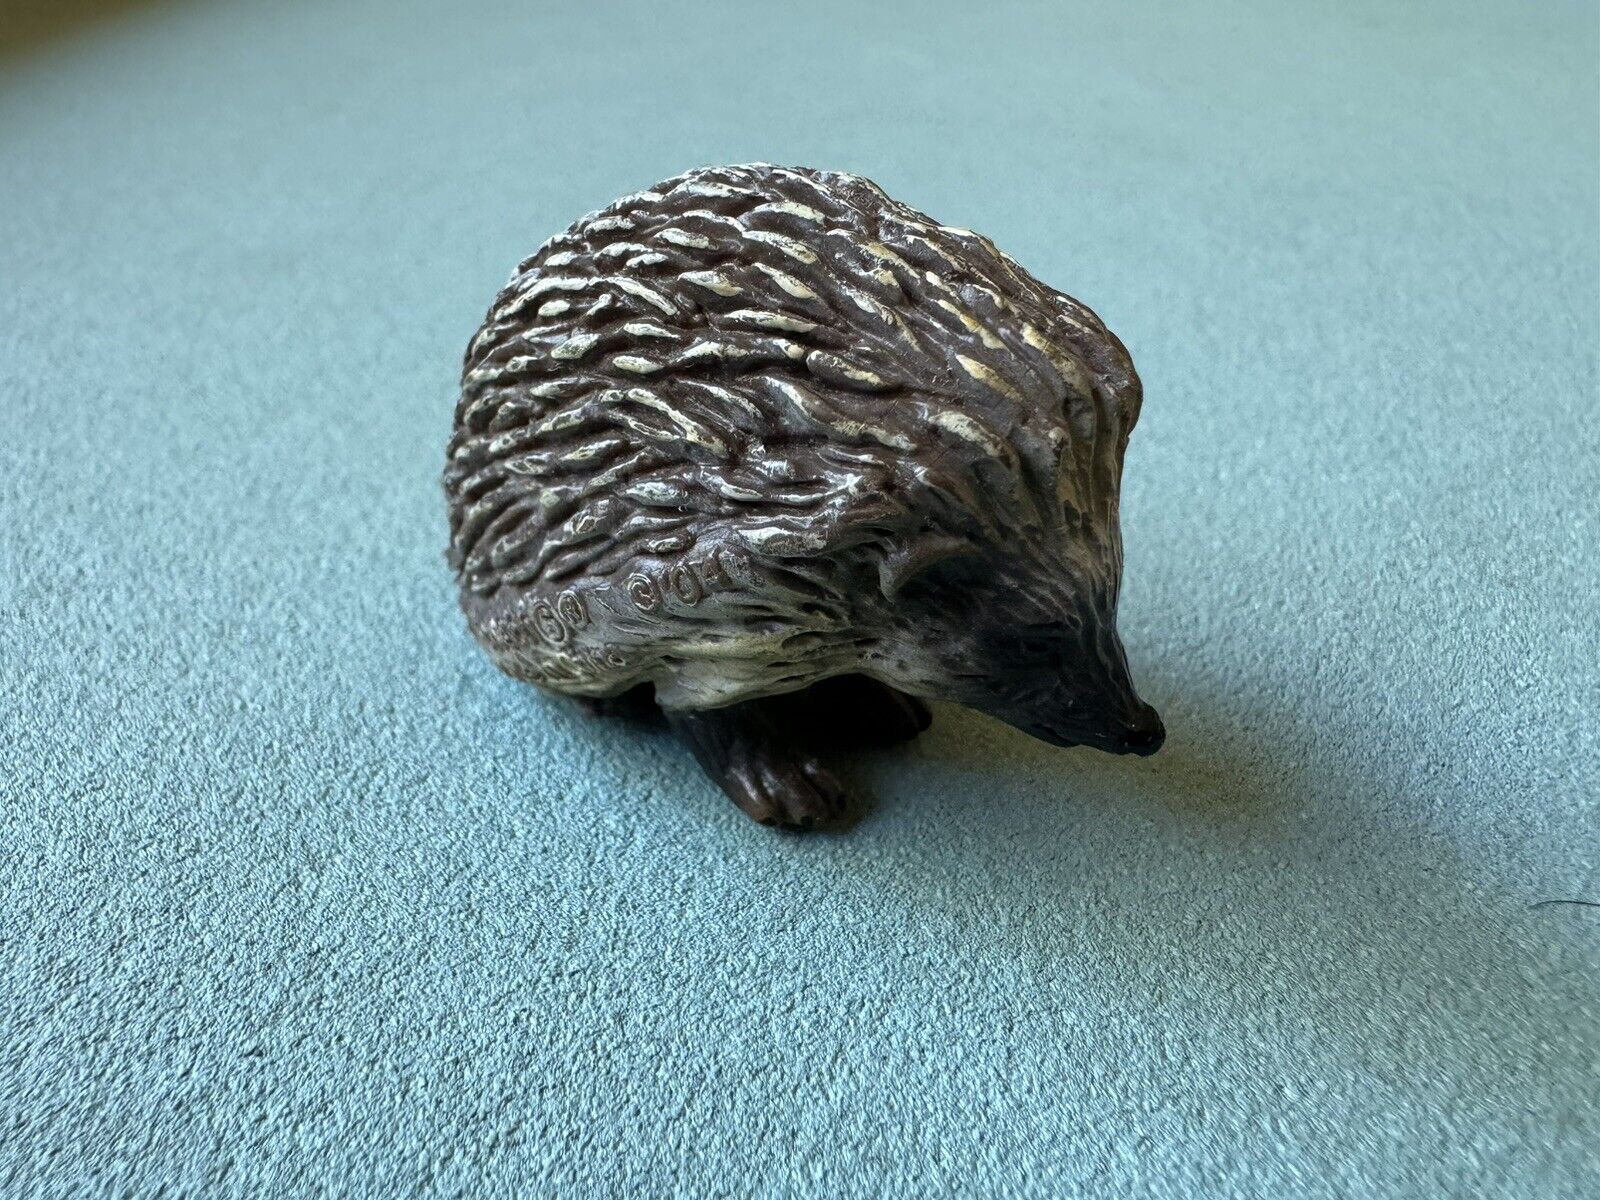 Schleich HEDGEHOG Small Animal Figure Retired 14337 Porcupine Figurine Pet 2004